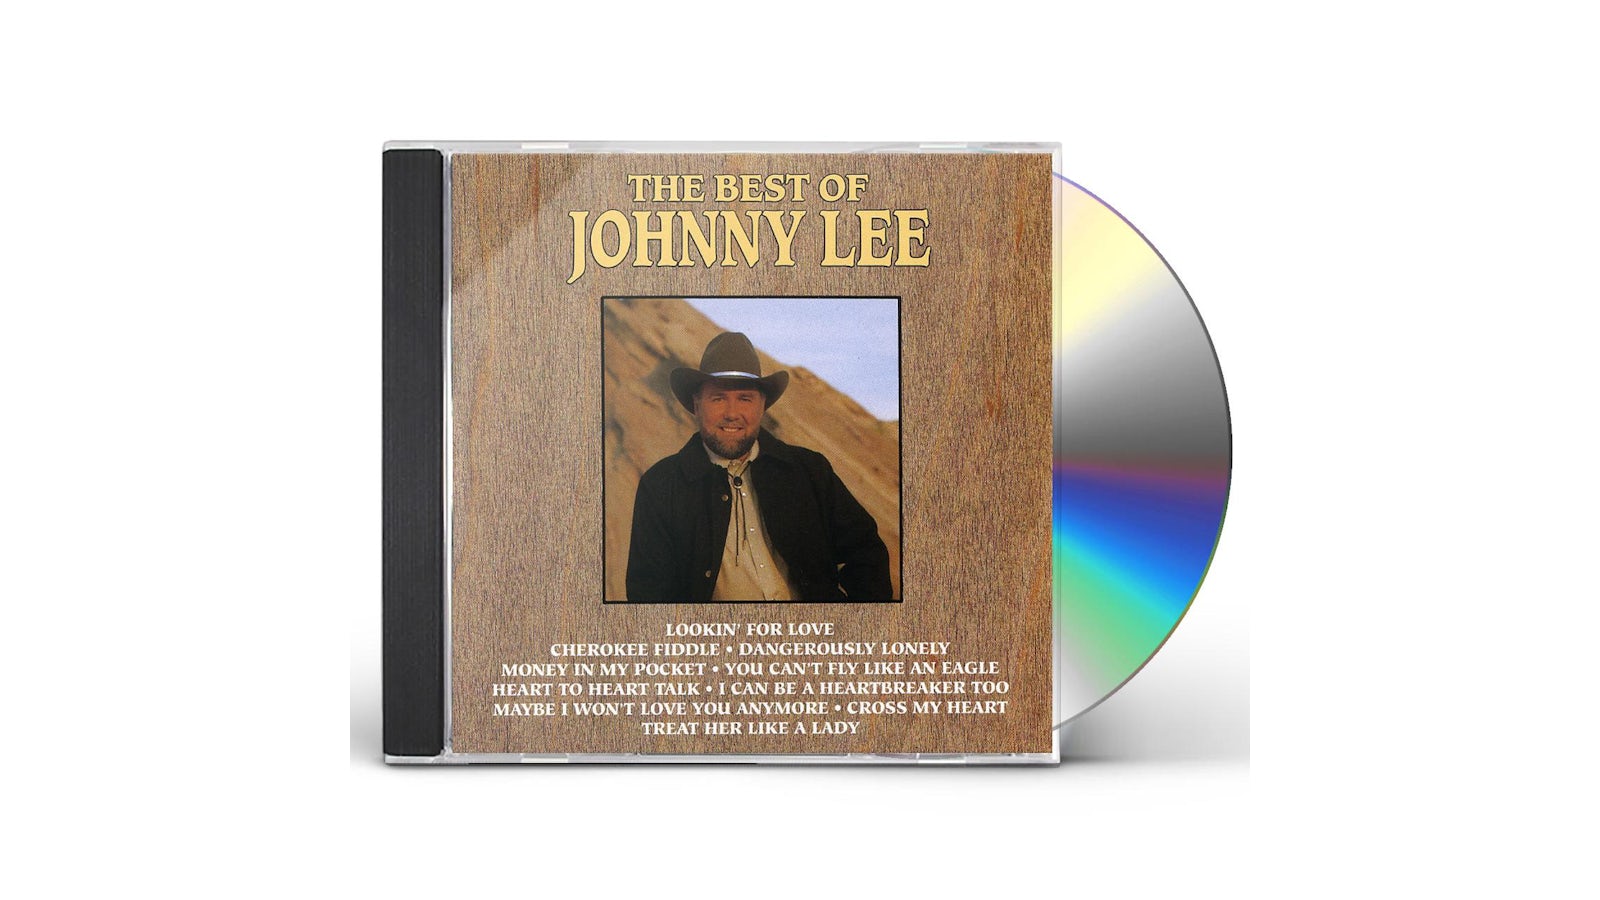 Johnny Lee BEST OF CD